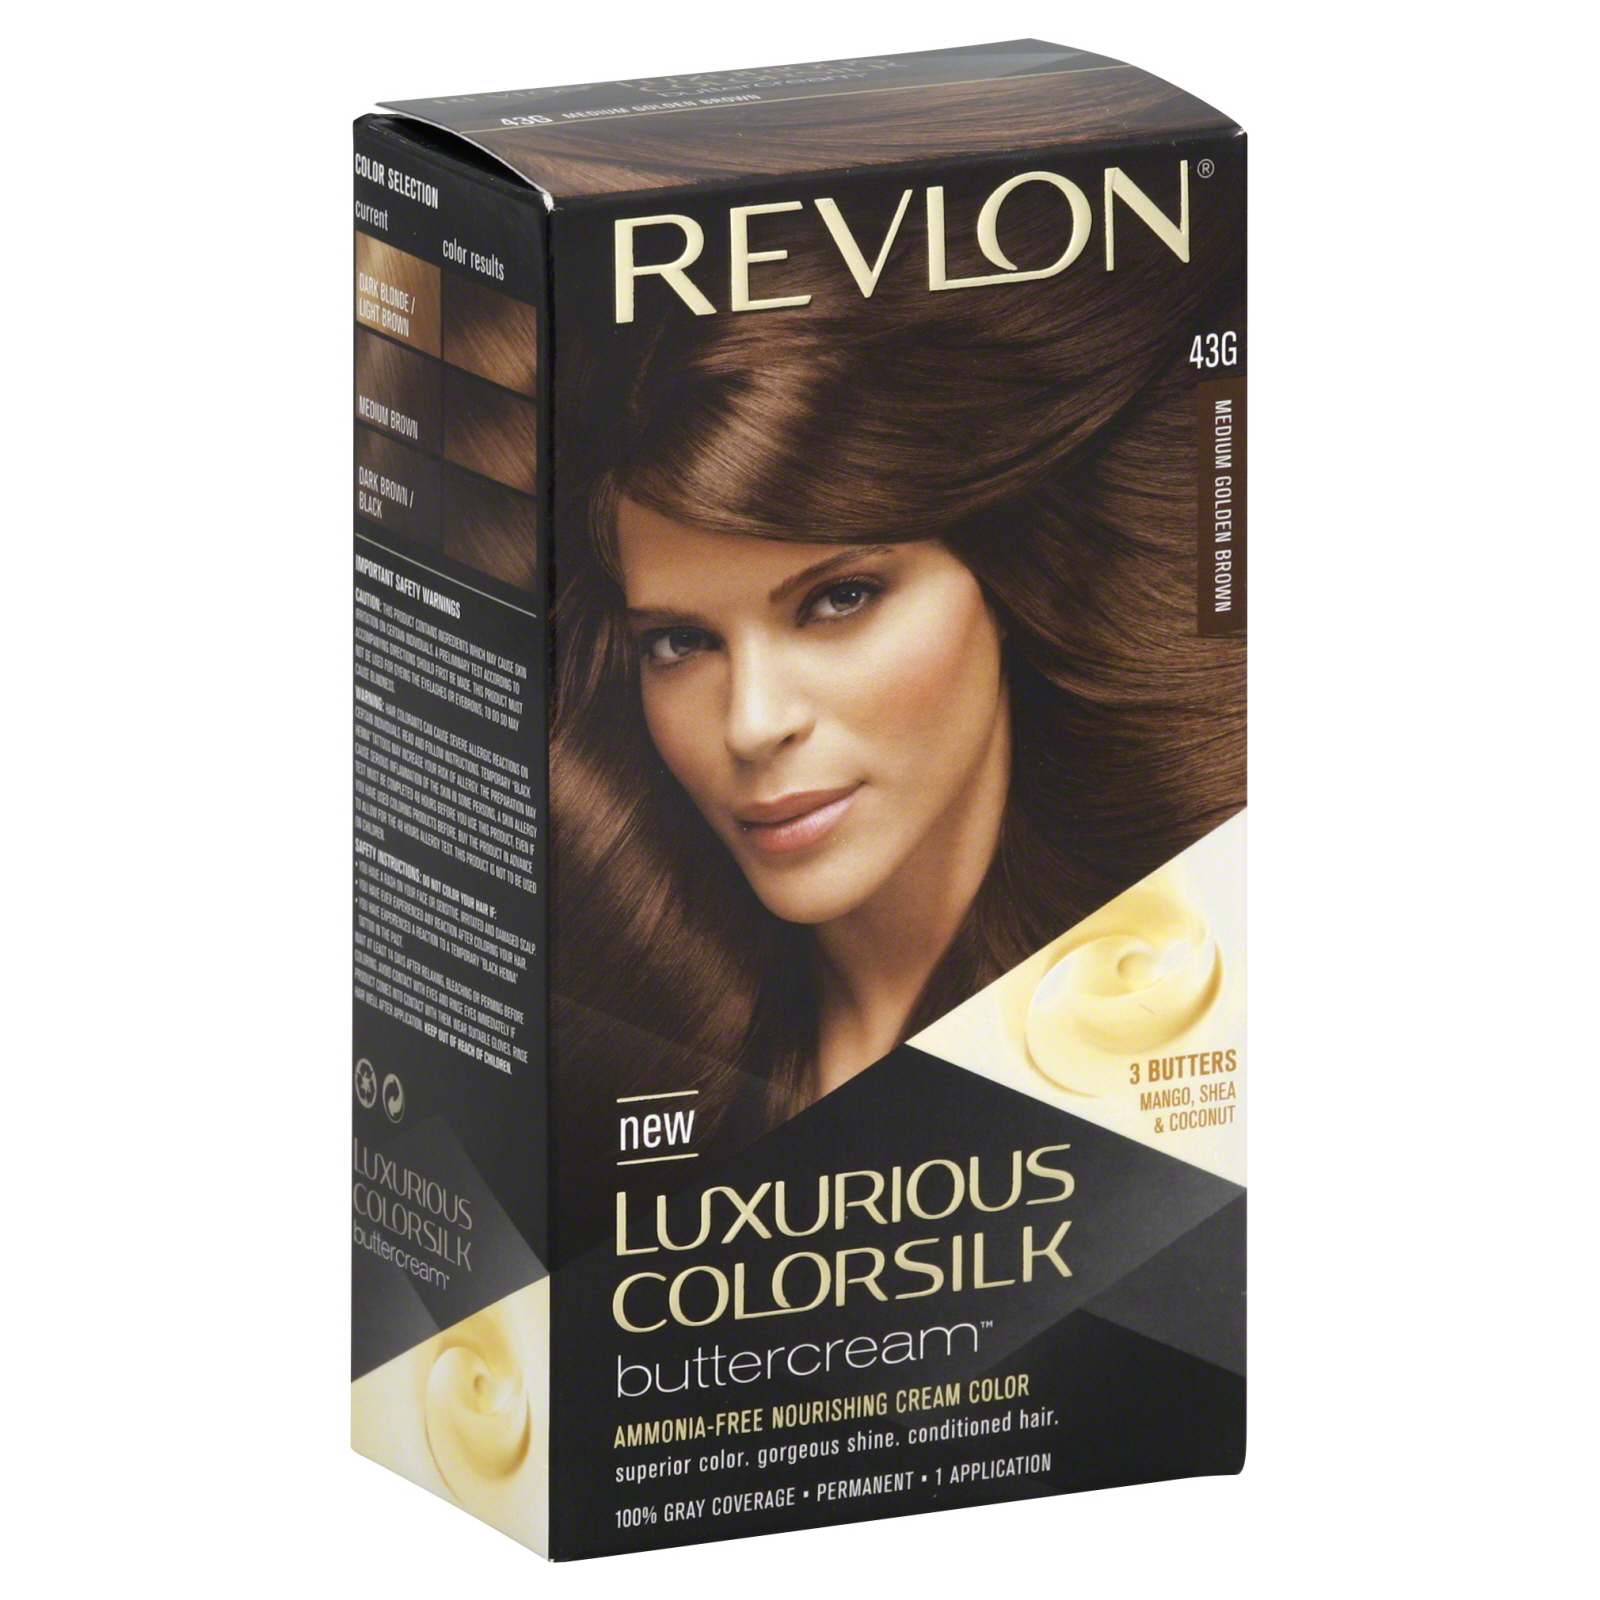 Revlon Luxurious Colorsilk Buttercream Permanent Color, Medium Golden Brown